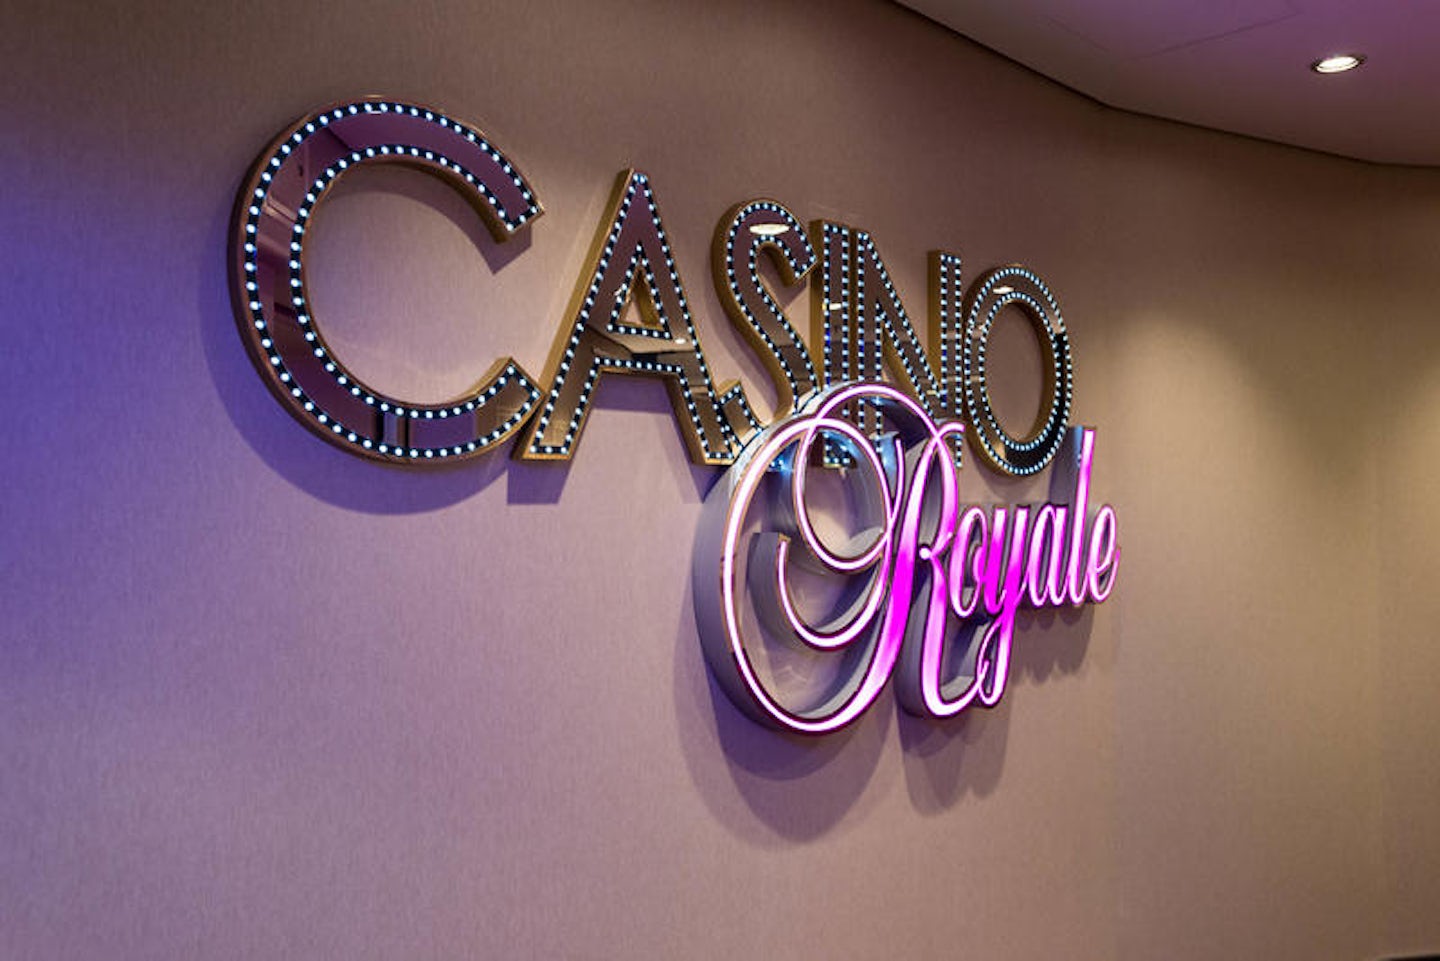 Casino Royale on Symphony of the Seas